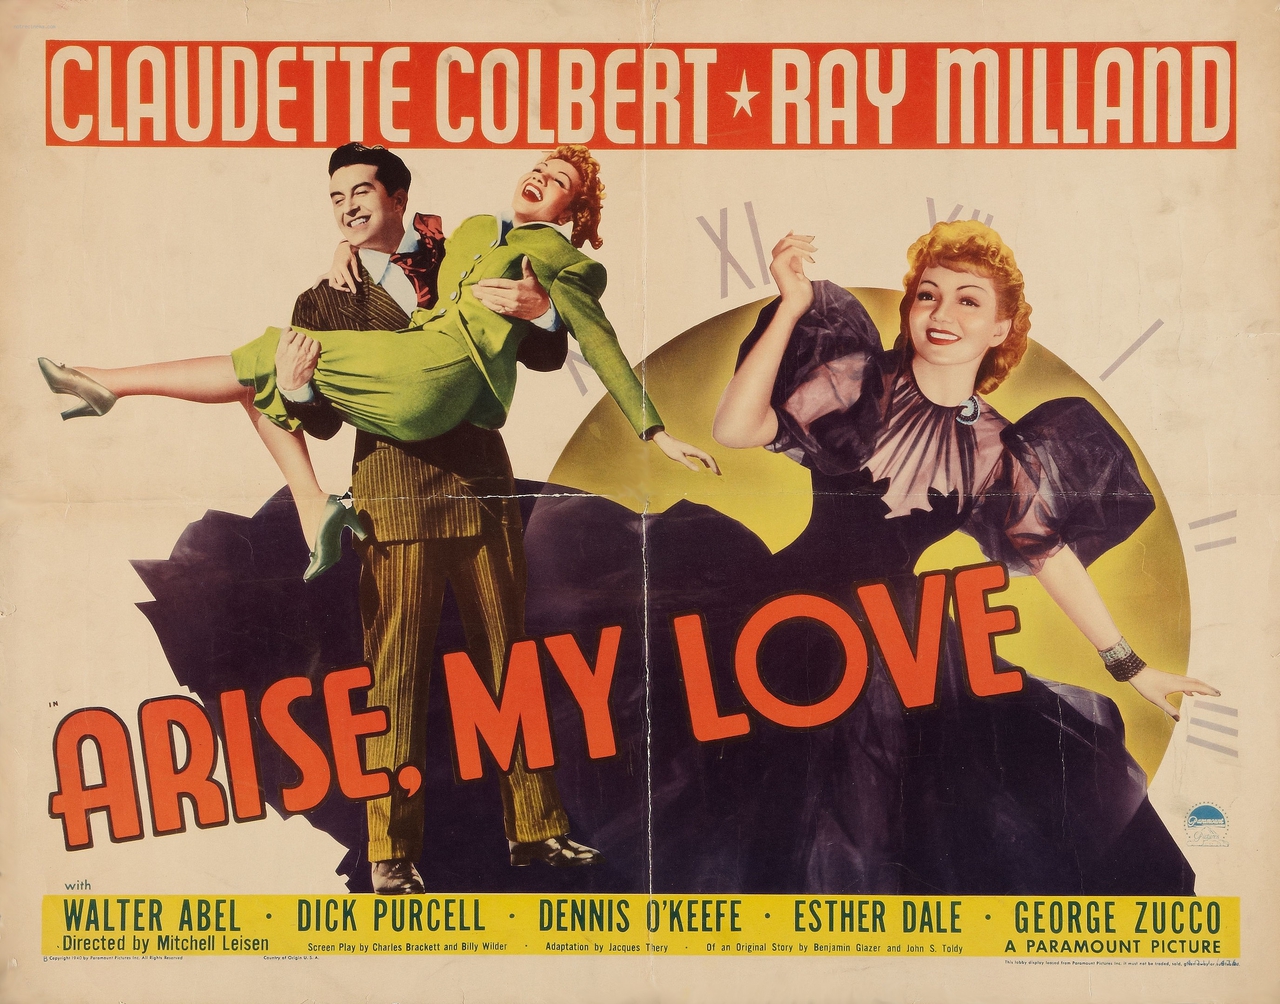 Claudette Colbert در صحنه فیلم سینمایی Arise, My Love به همراه ری میلند